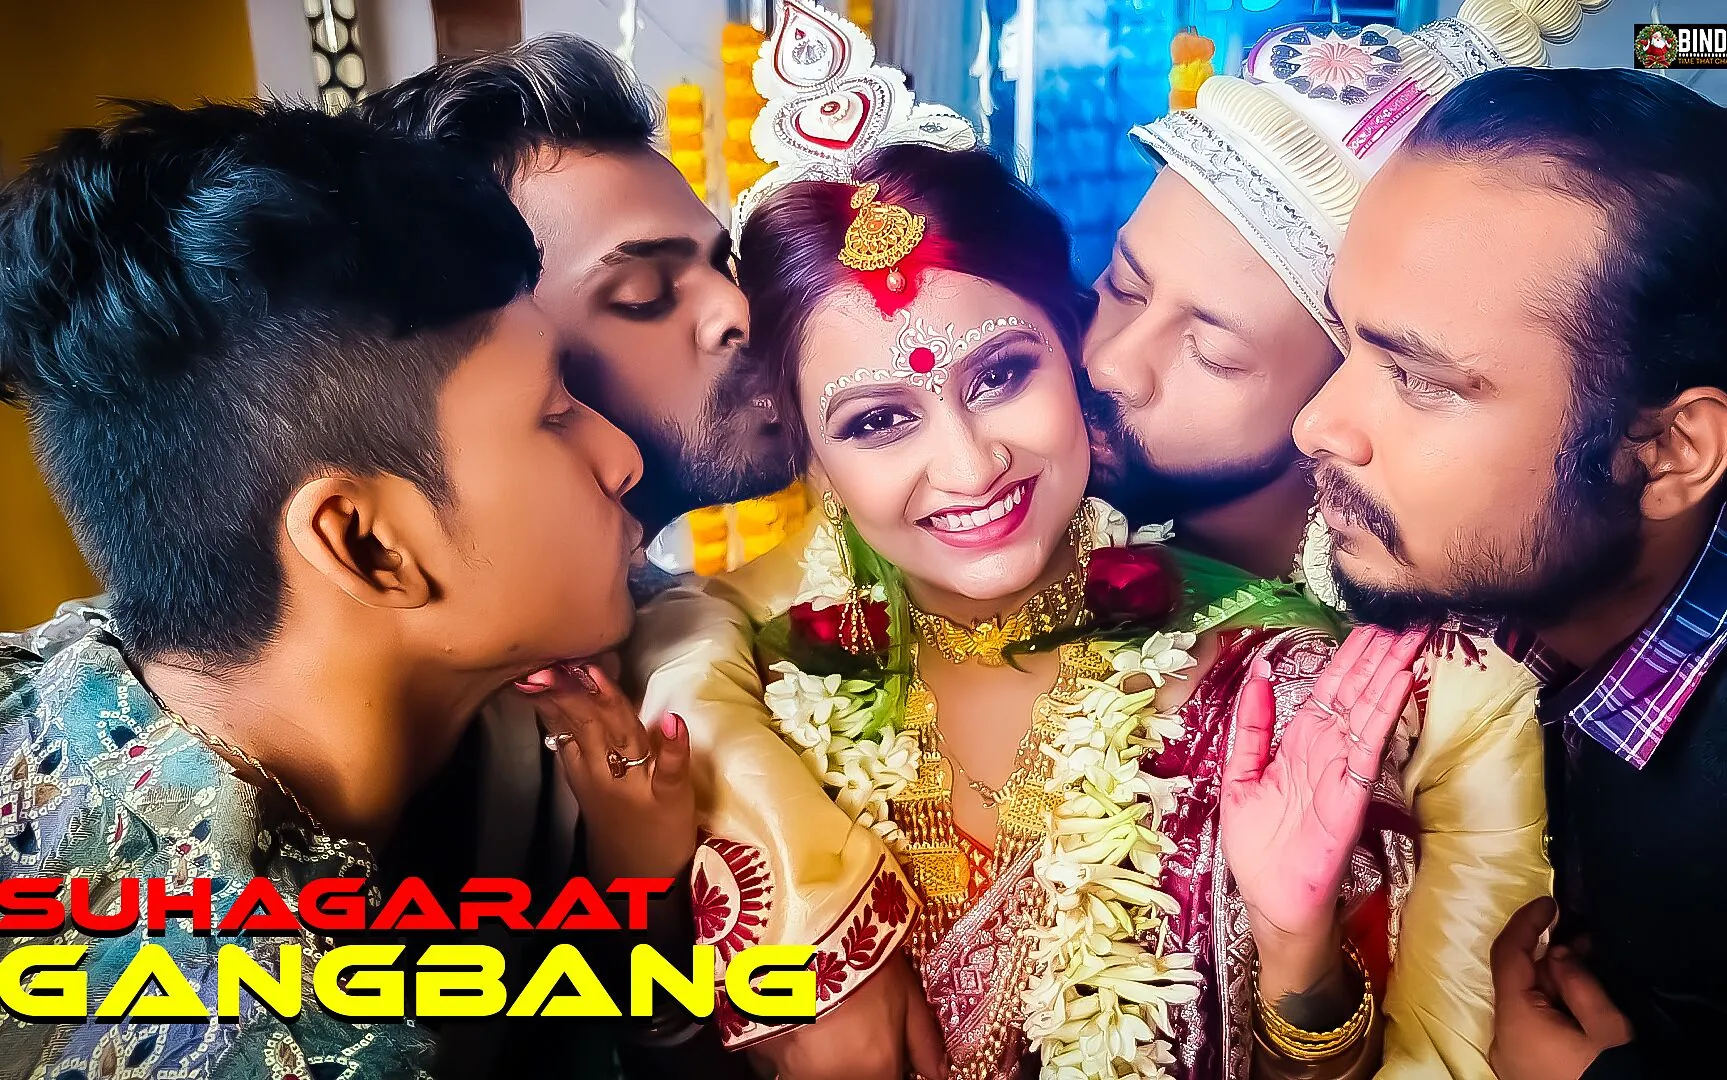 Indian Housewife Ki Suhagrat Ki Video - Gangbang Suhagarat - Besi Indian Wife Very 1st Suhagarat with Four Husband  ( Full Movie ) by Cine Flix Media | Faphouse